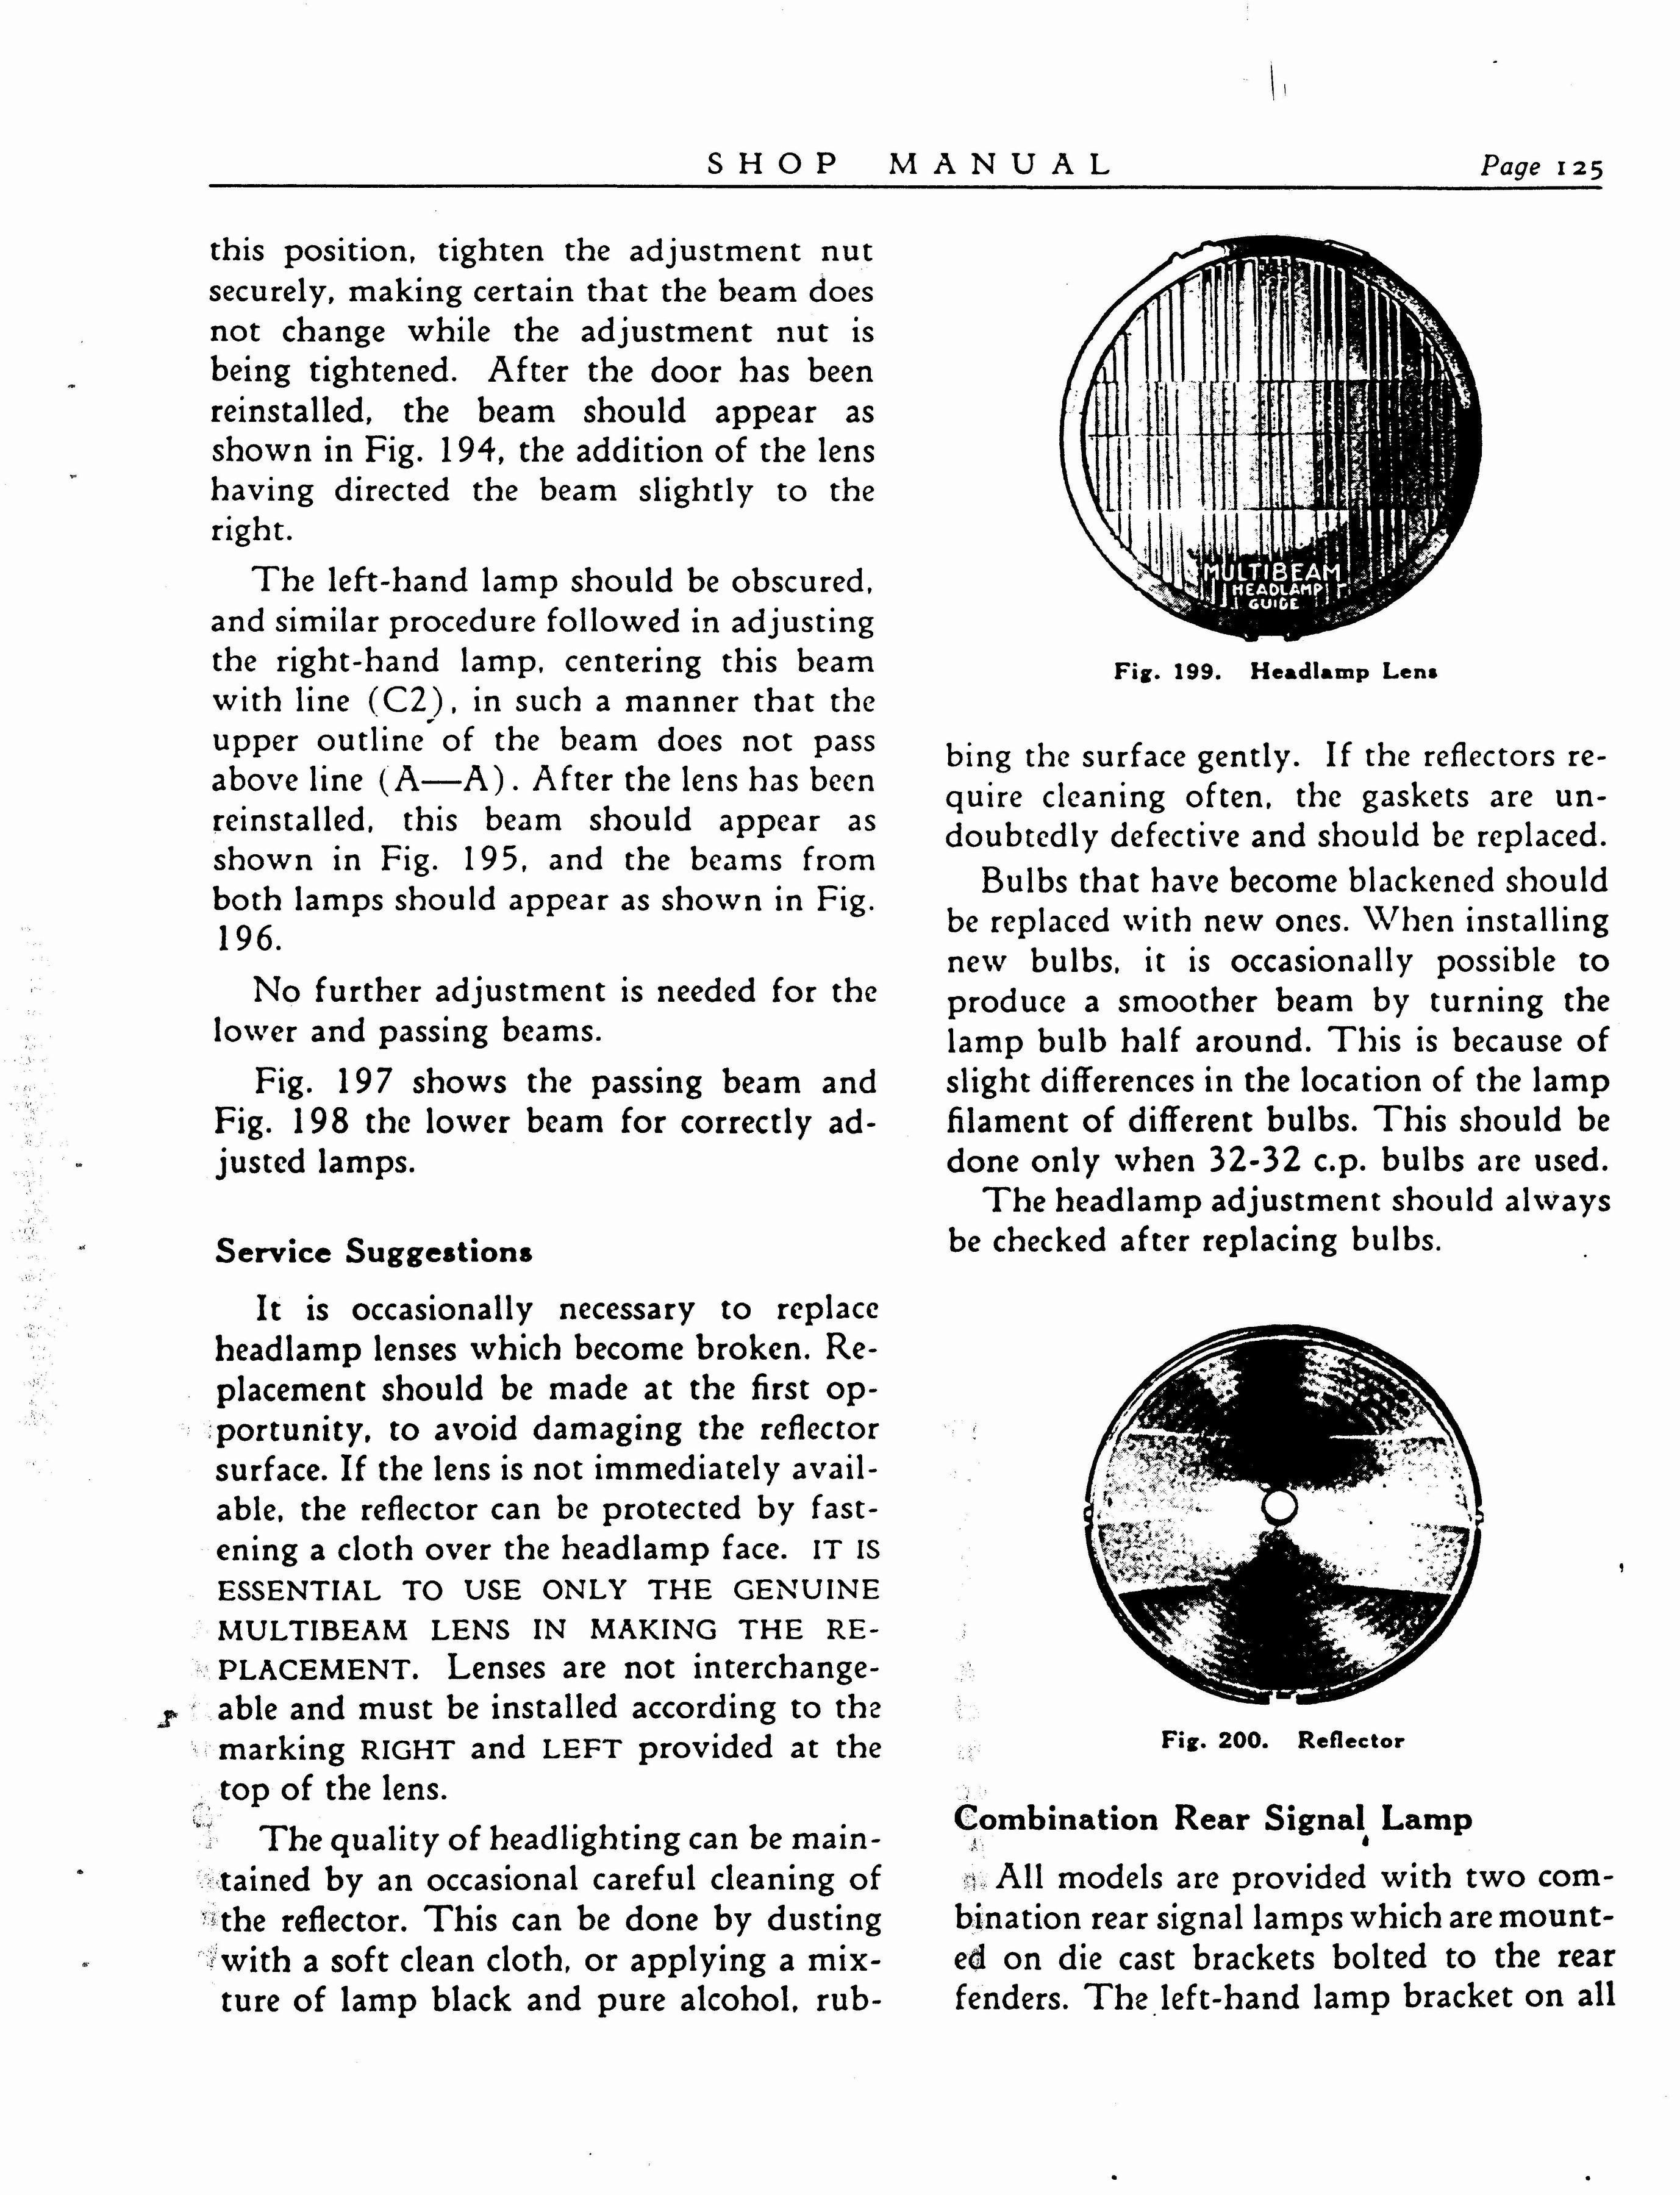 n_1933 Buick Shop Manual_Page_126.jpg